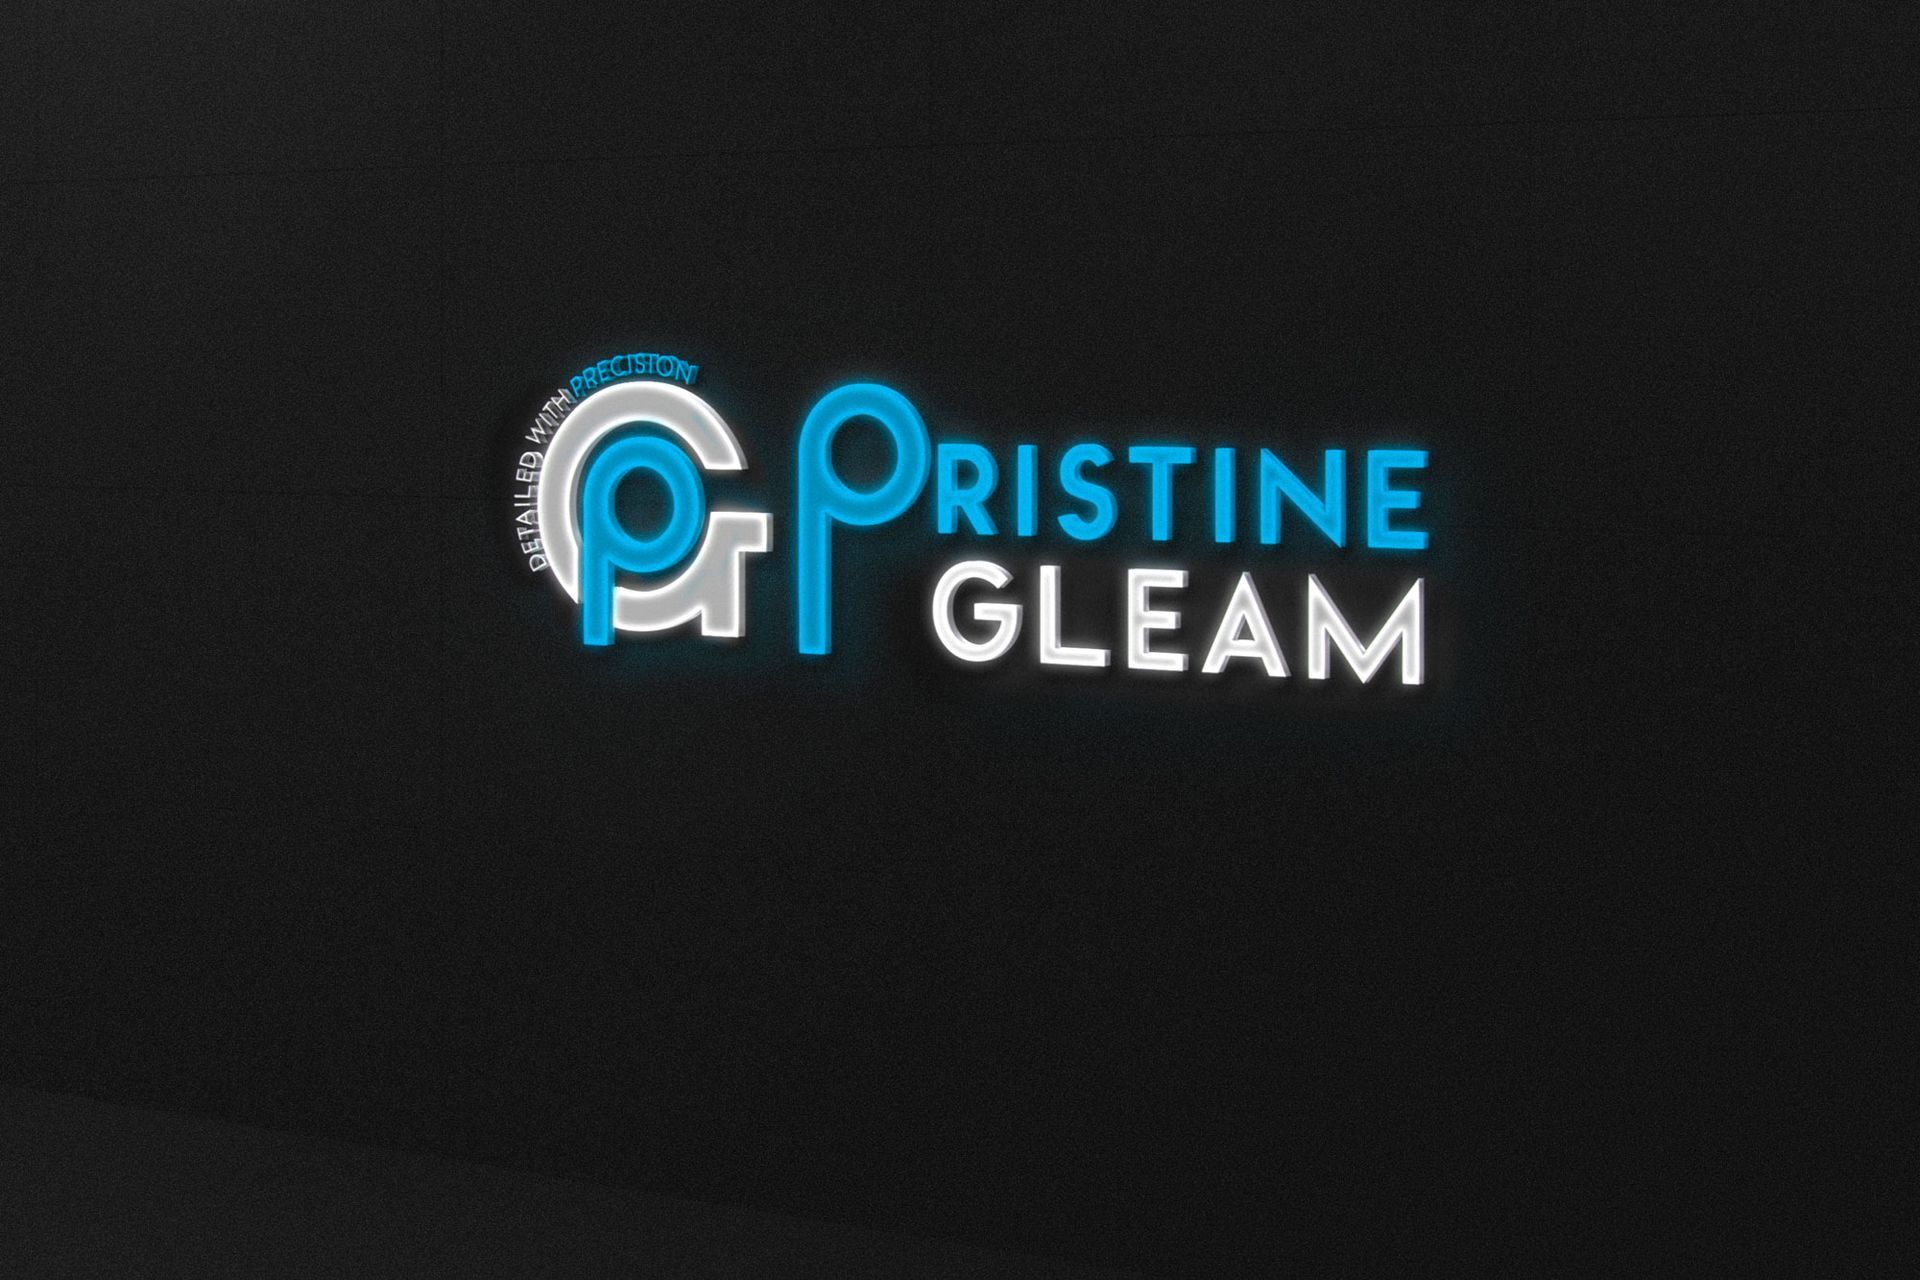 A logo of Pristine Gleam on a black background